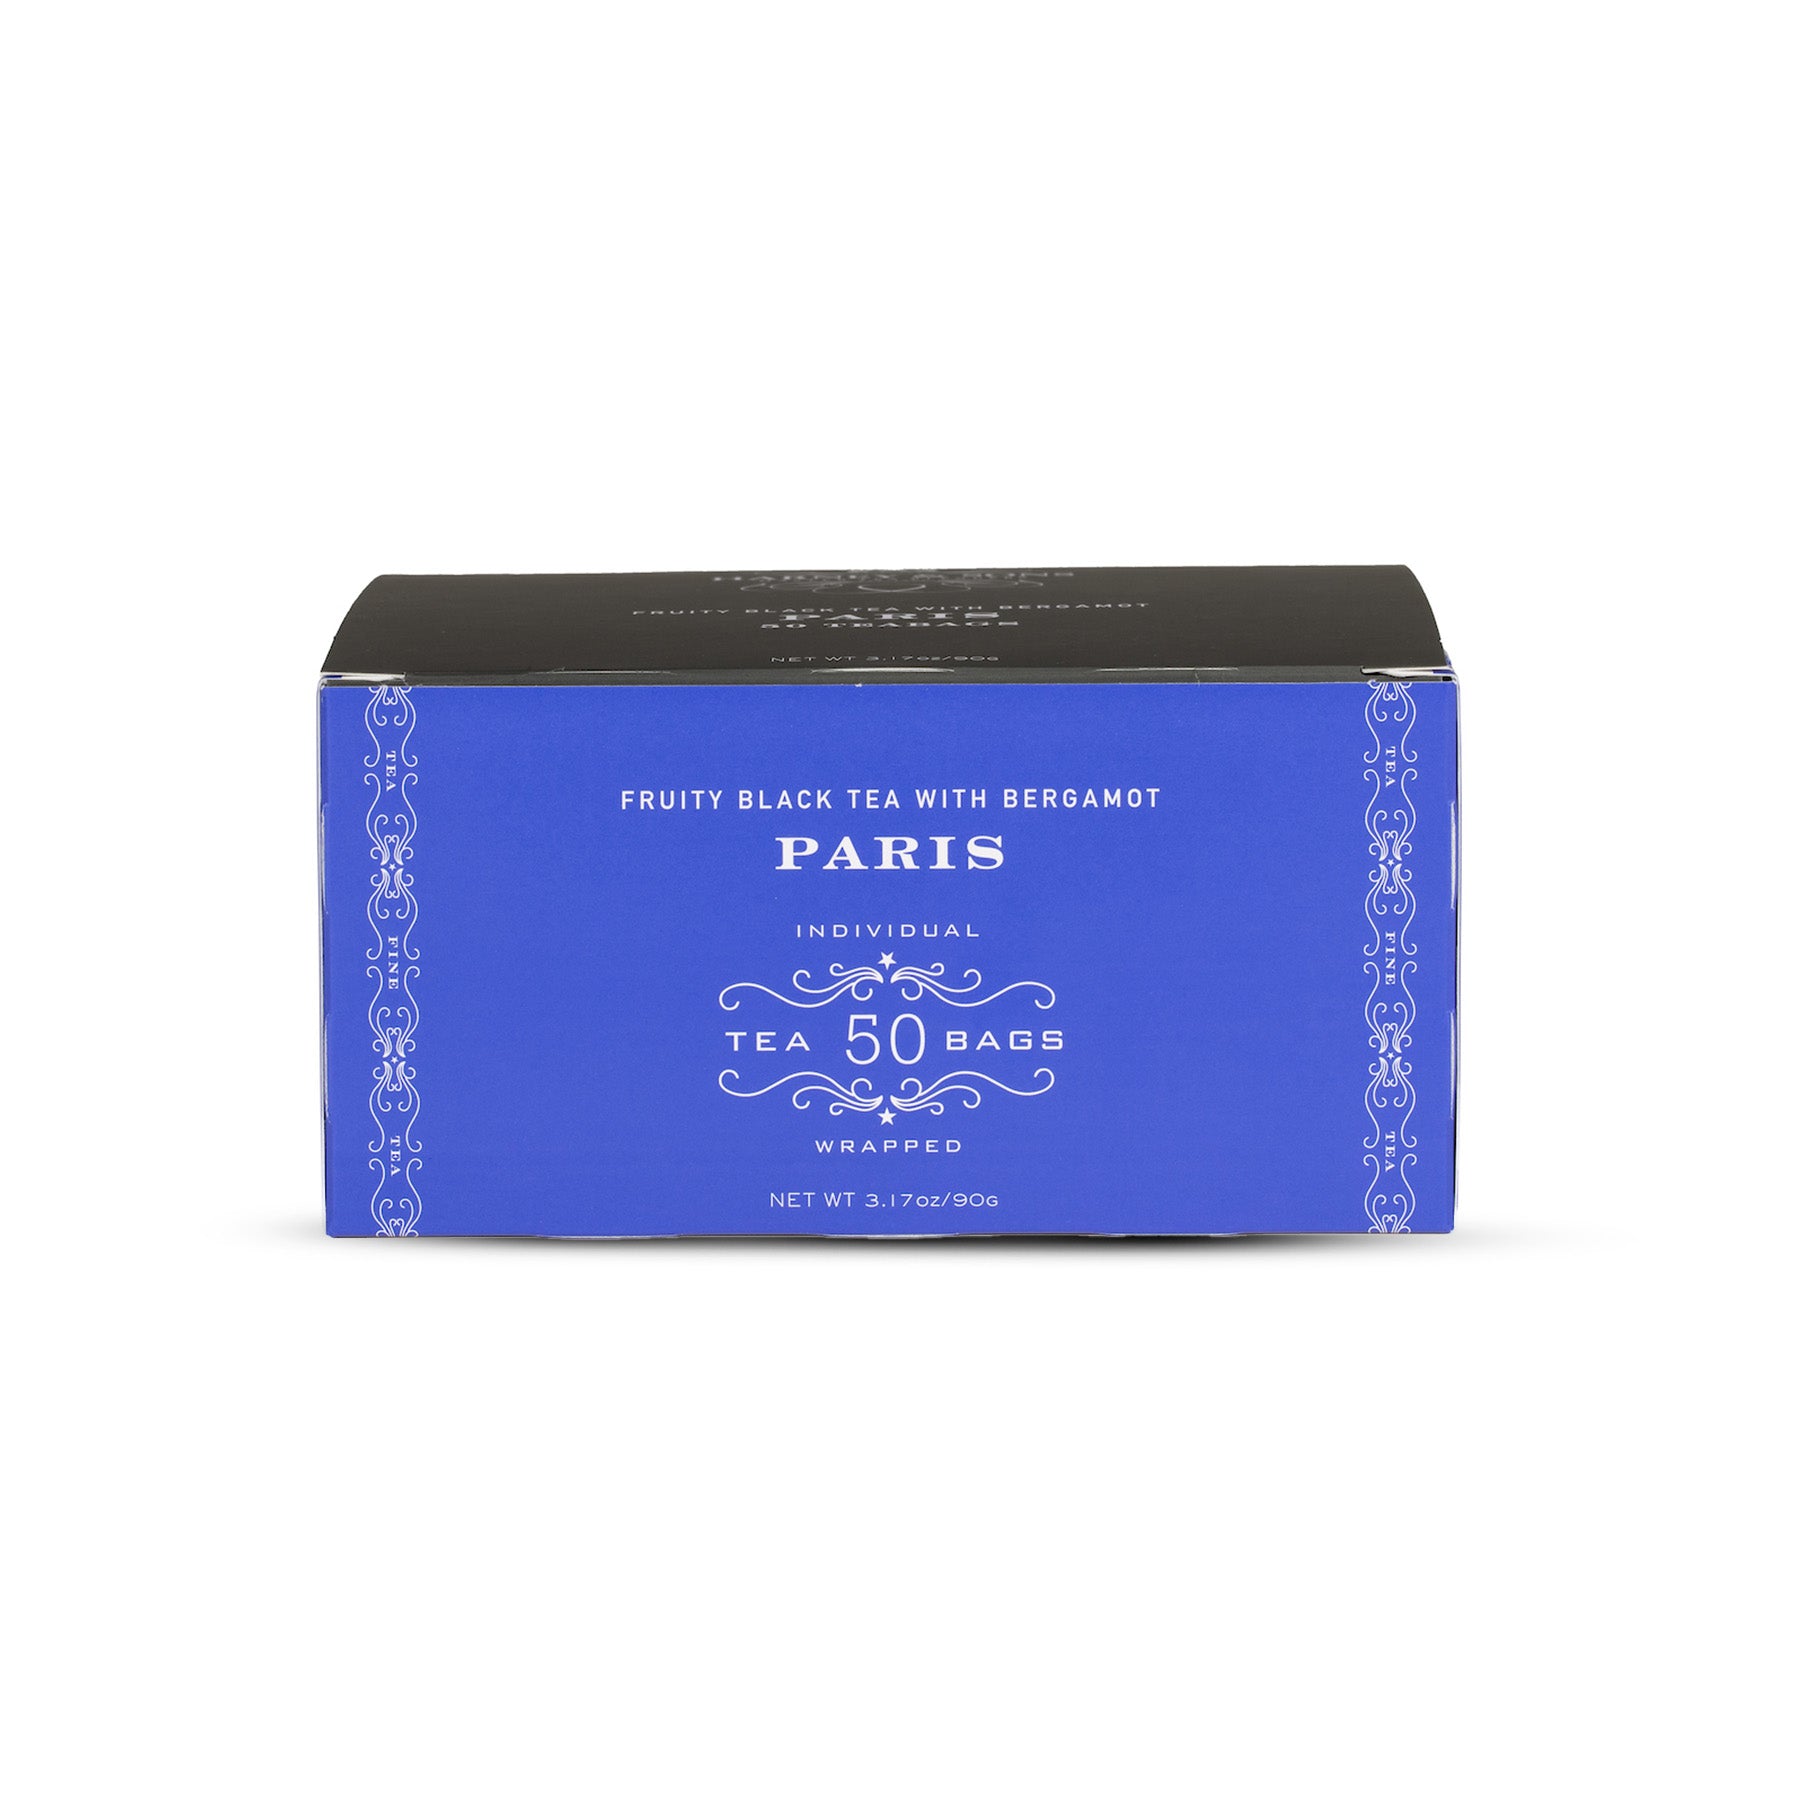 Paris - Teabags 50 CT Foil Wrapped Teabags - Harney & Sons Fine Teas Europe